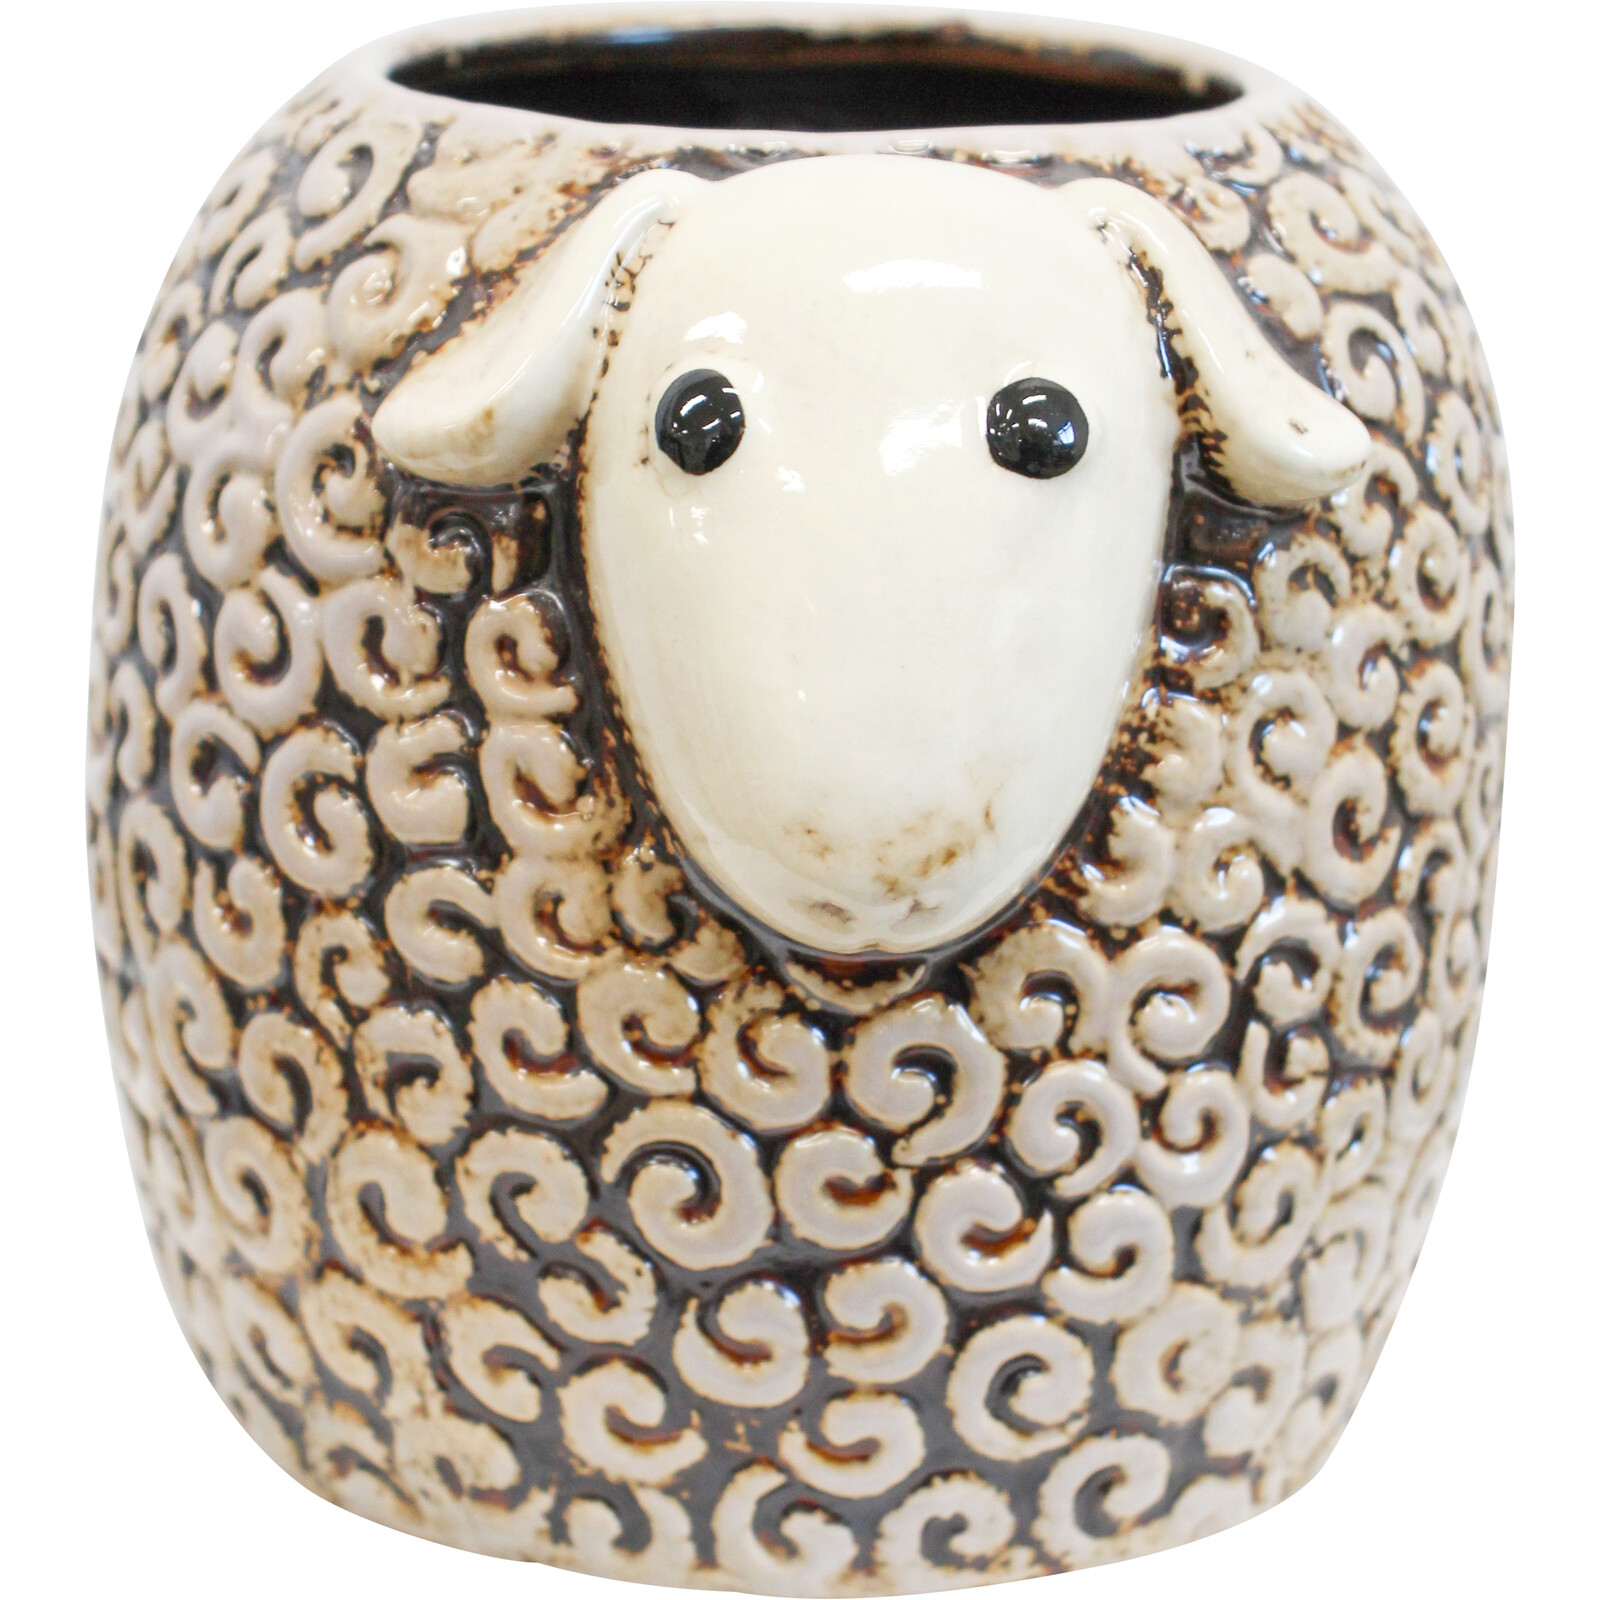 Planter/Vase Shaun the Sheep